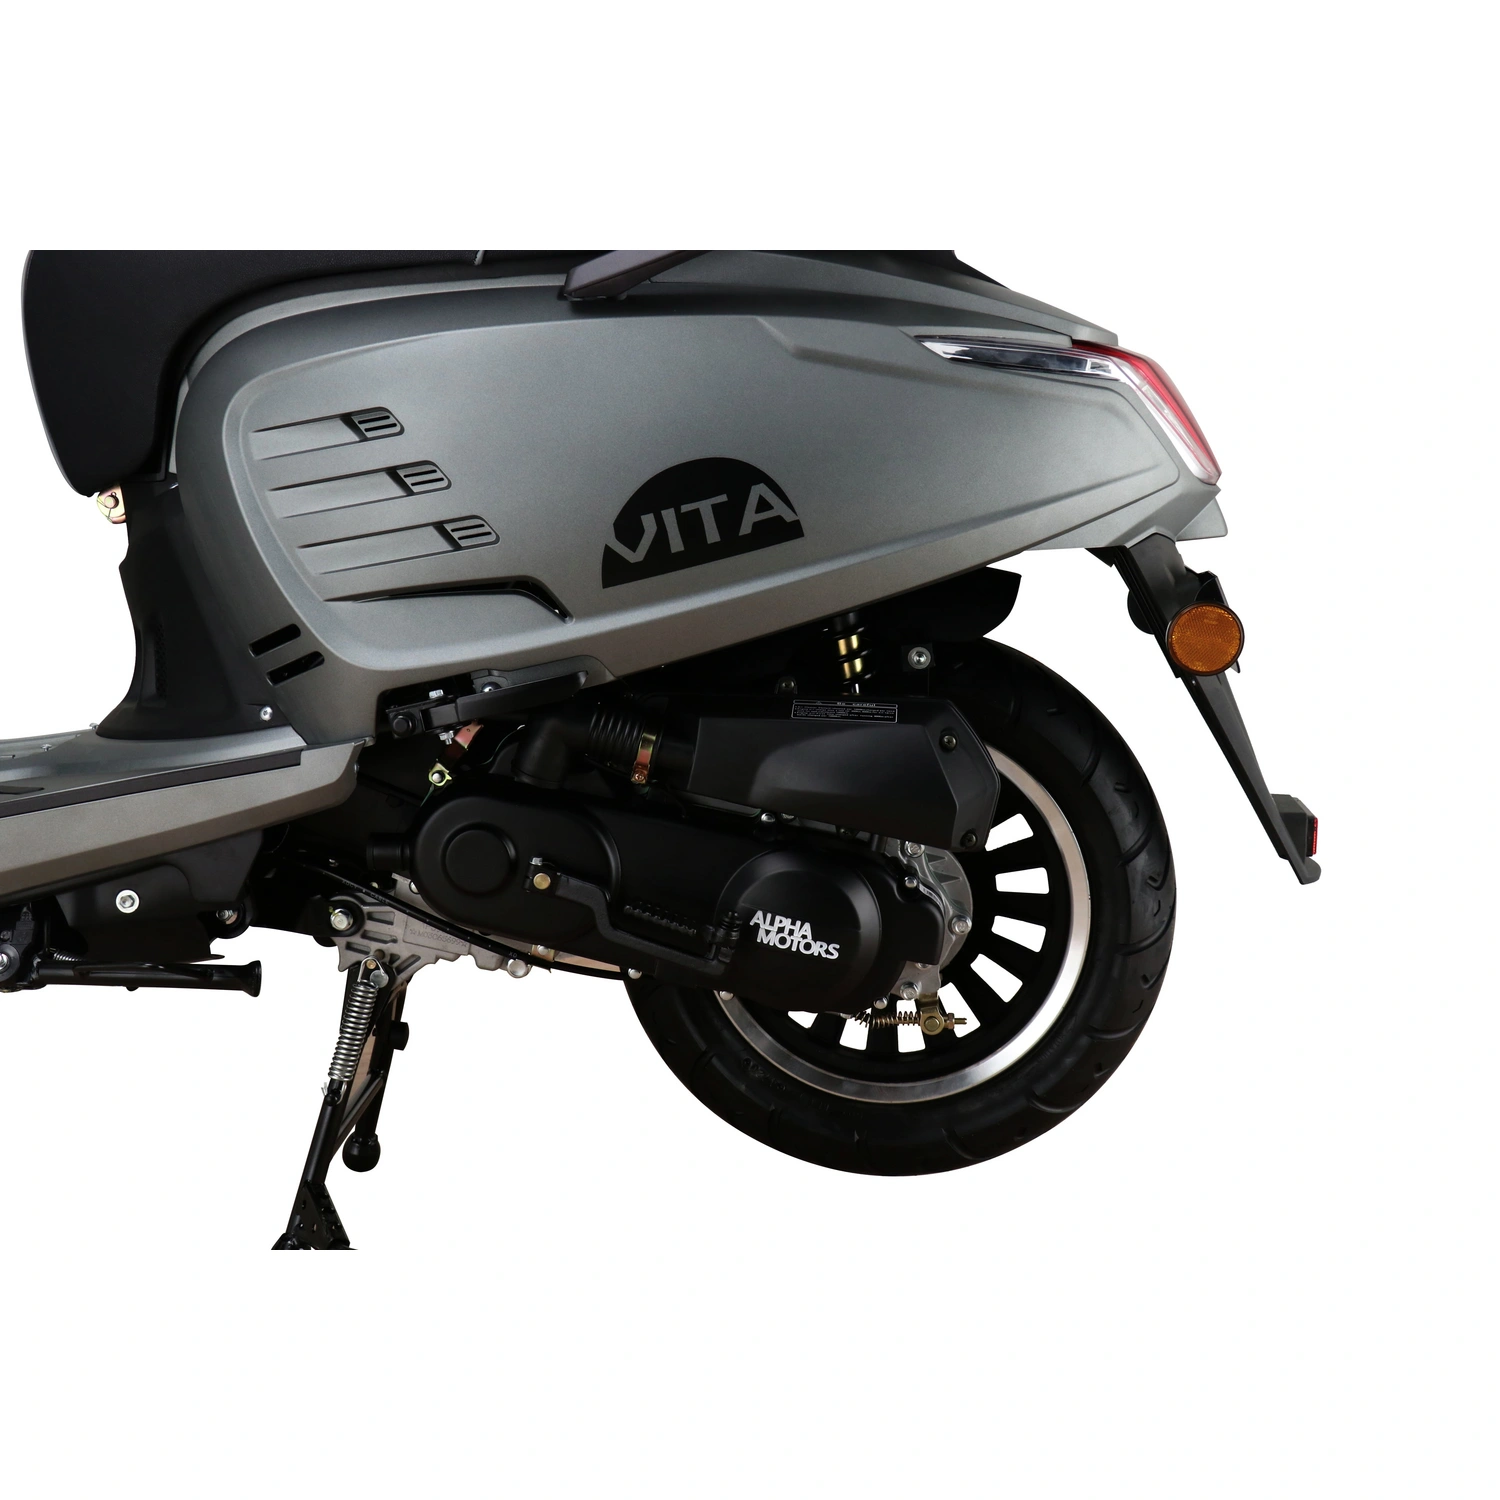 ALPHA MOTORS Motorroller Euro »Vita«, 5 50 45km/h, cm³